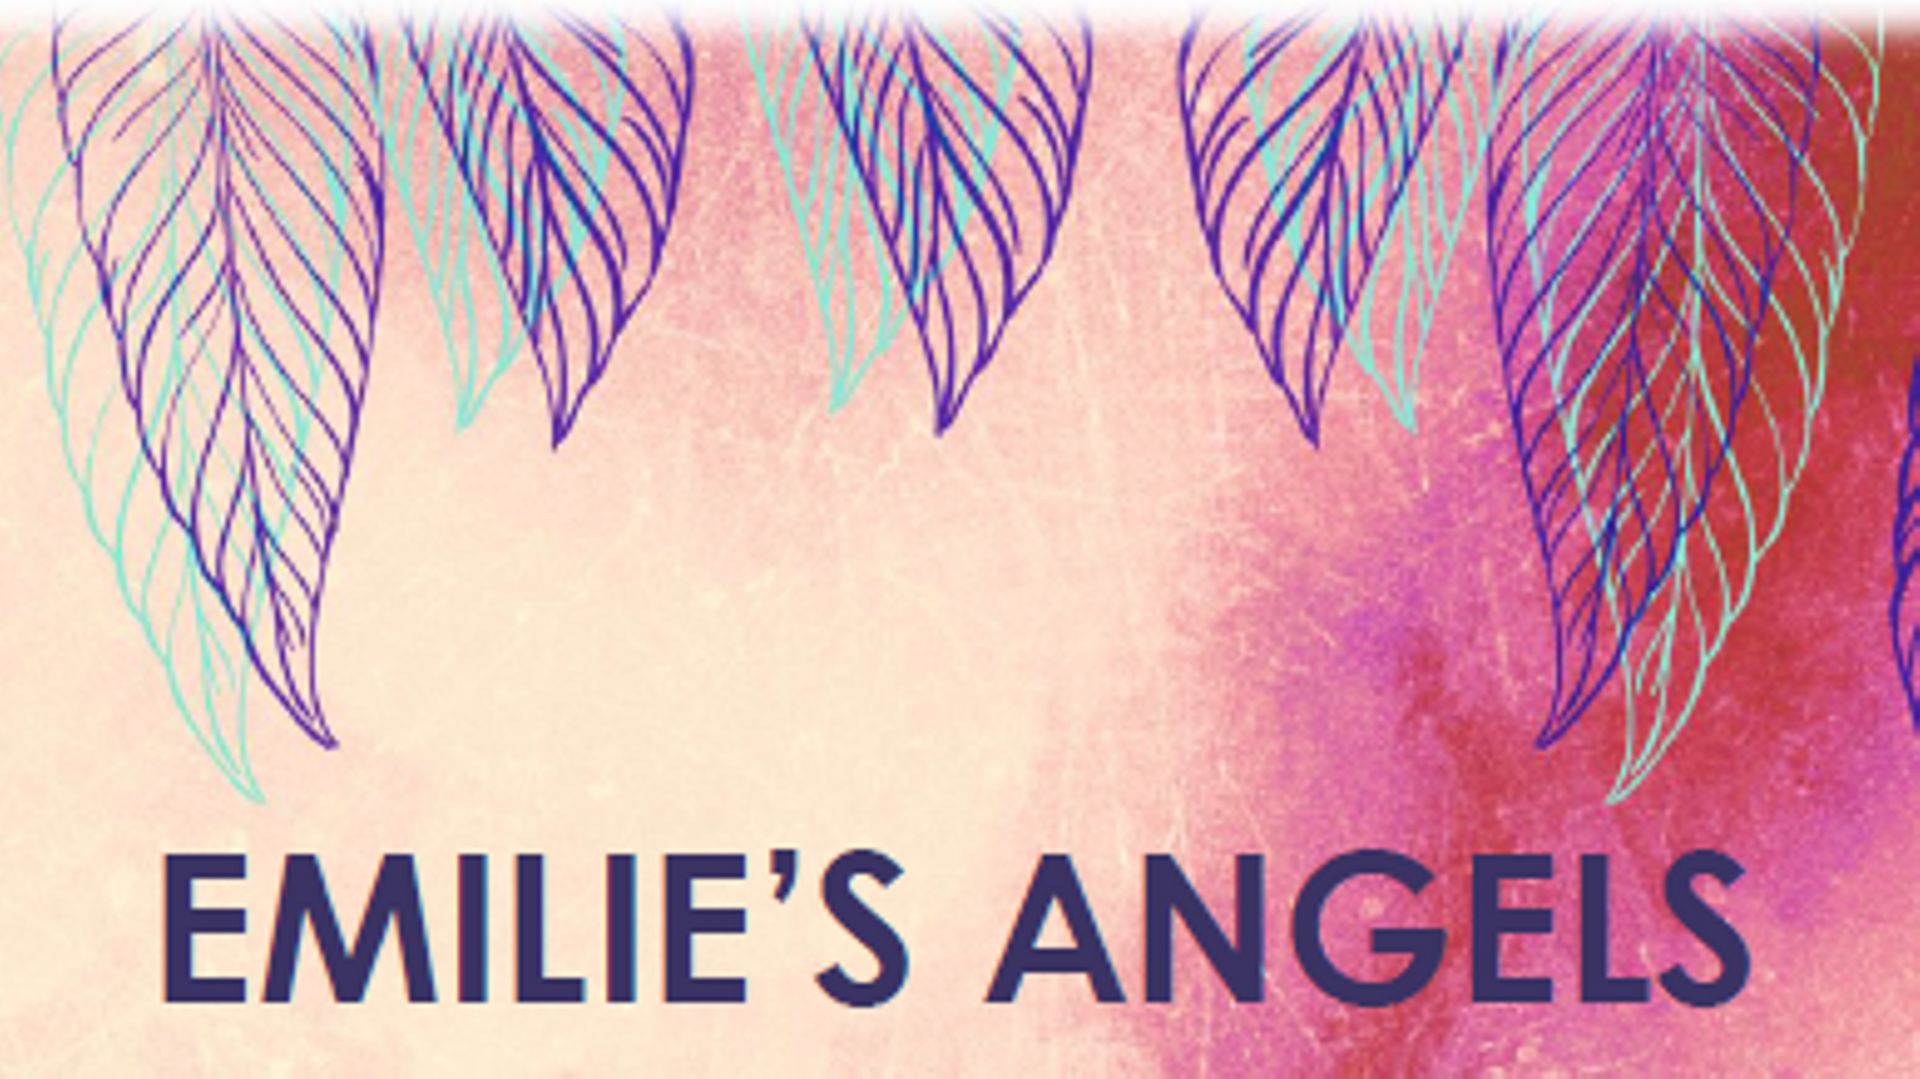 Emilie's Angel's